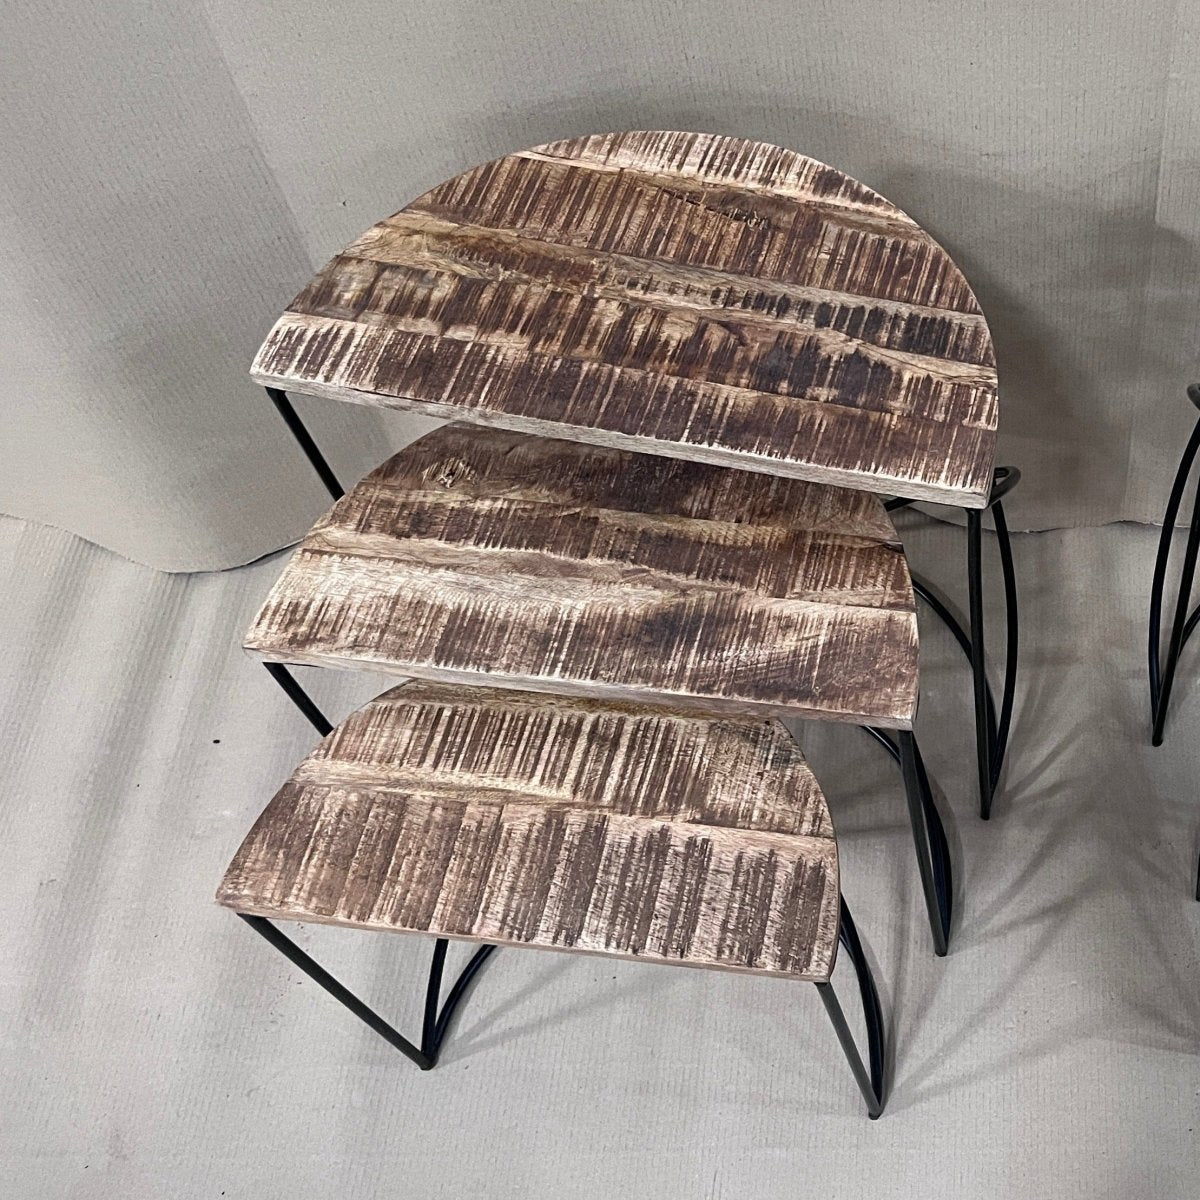 Trivi set of 3 nesting end tables - Rustic Furniture Outlet